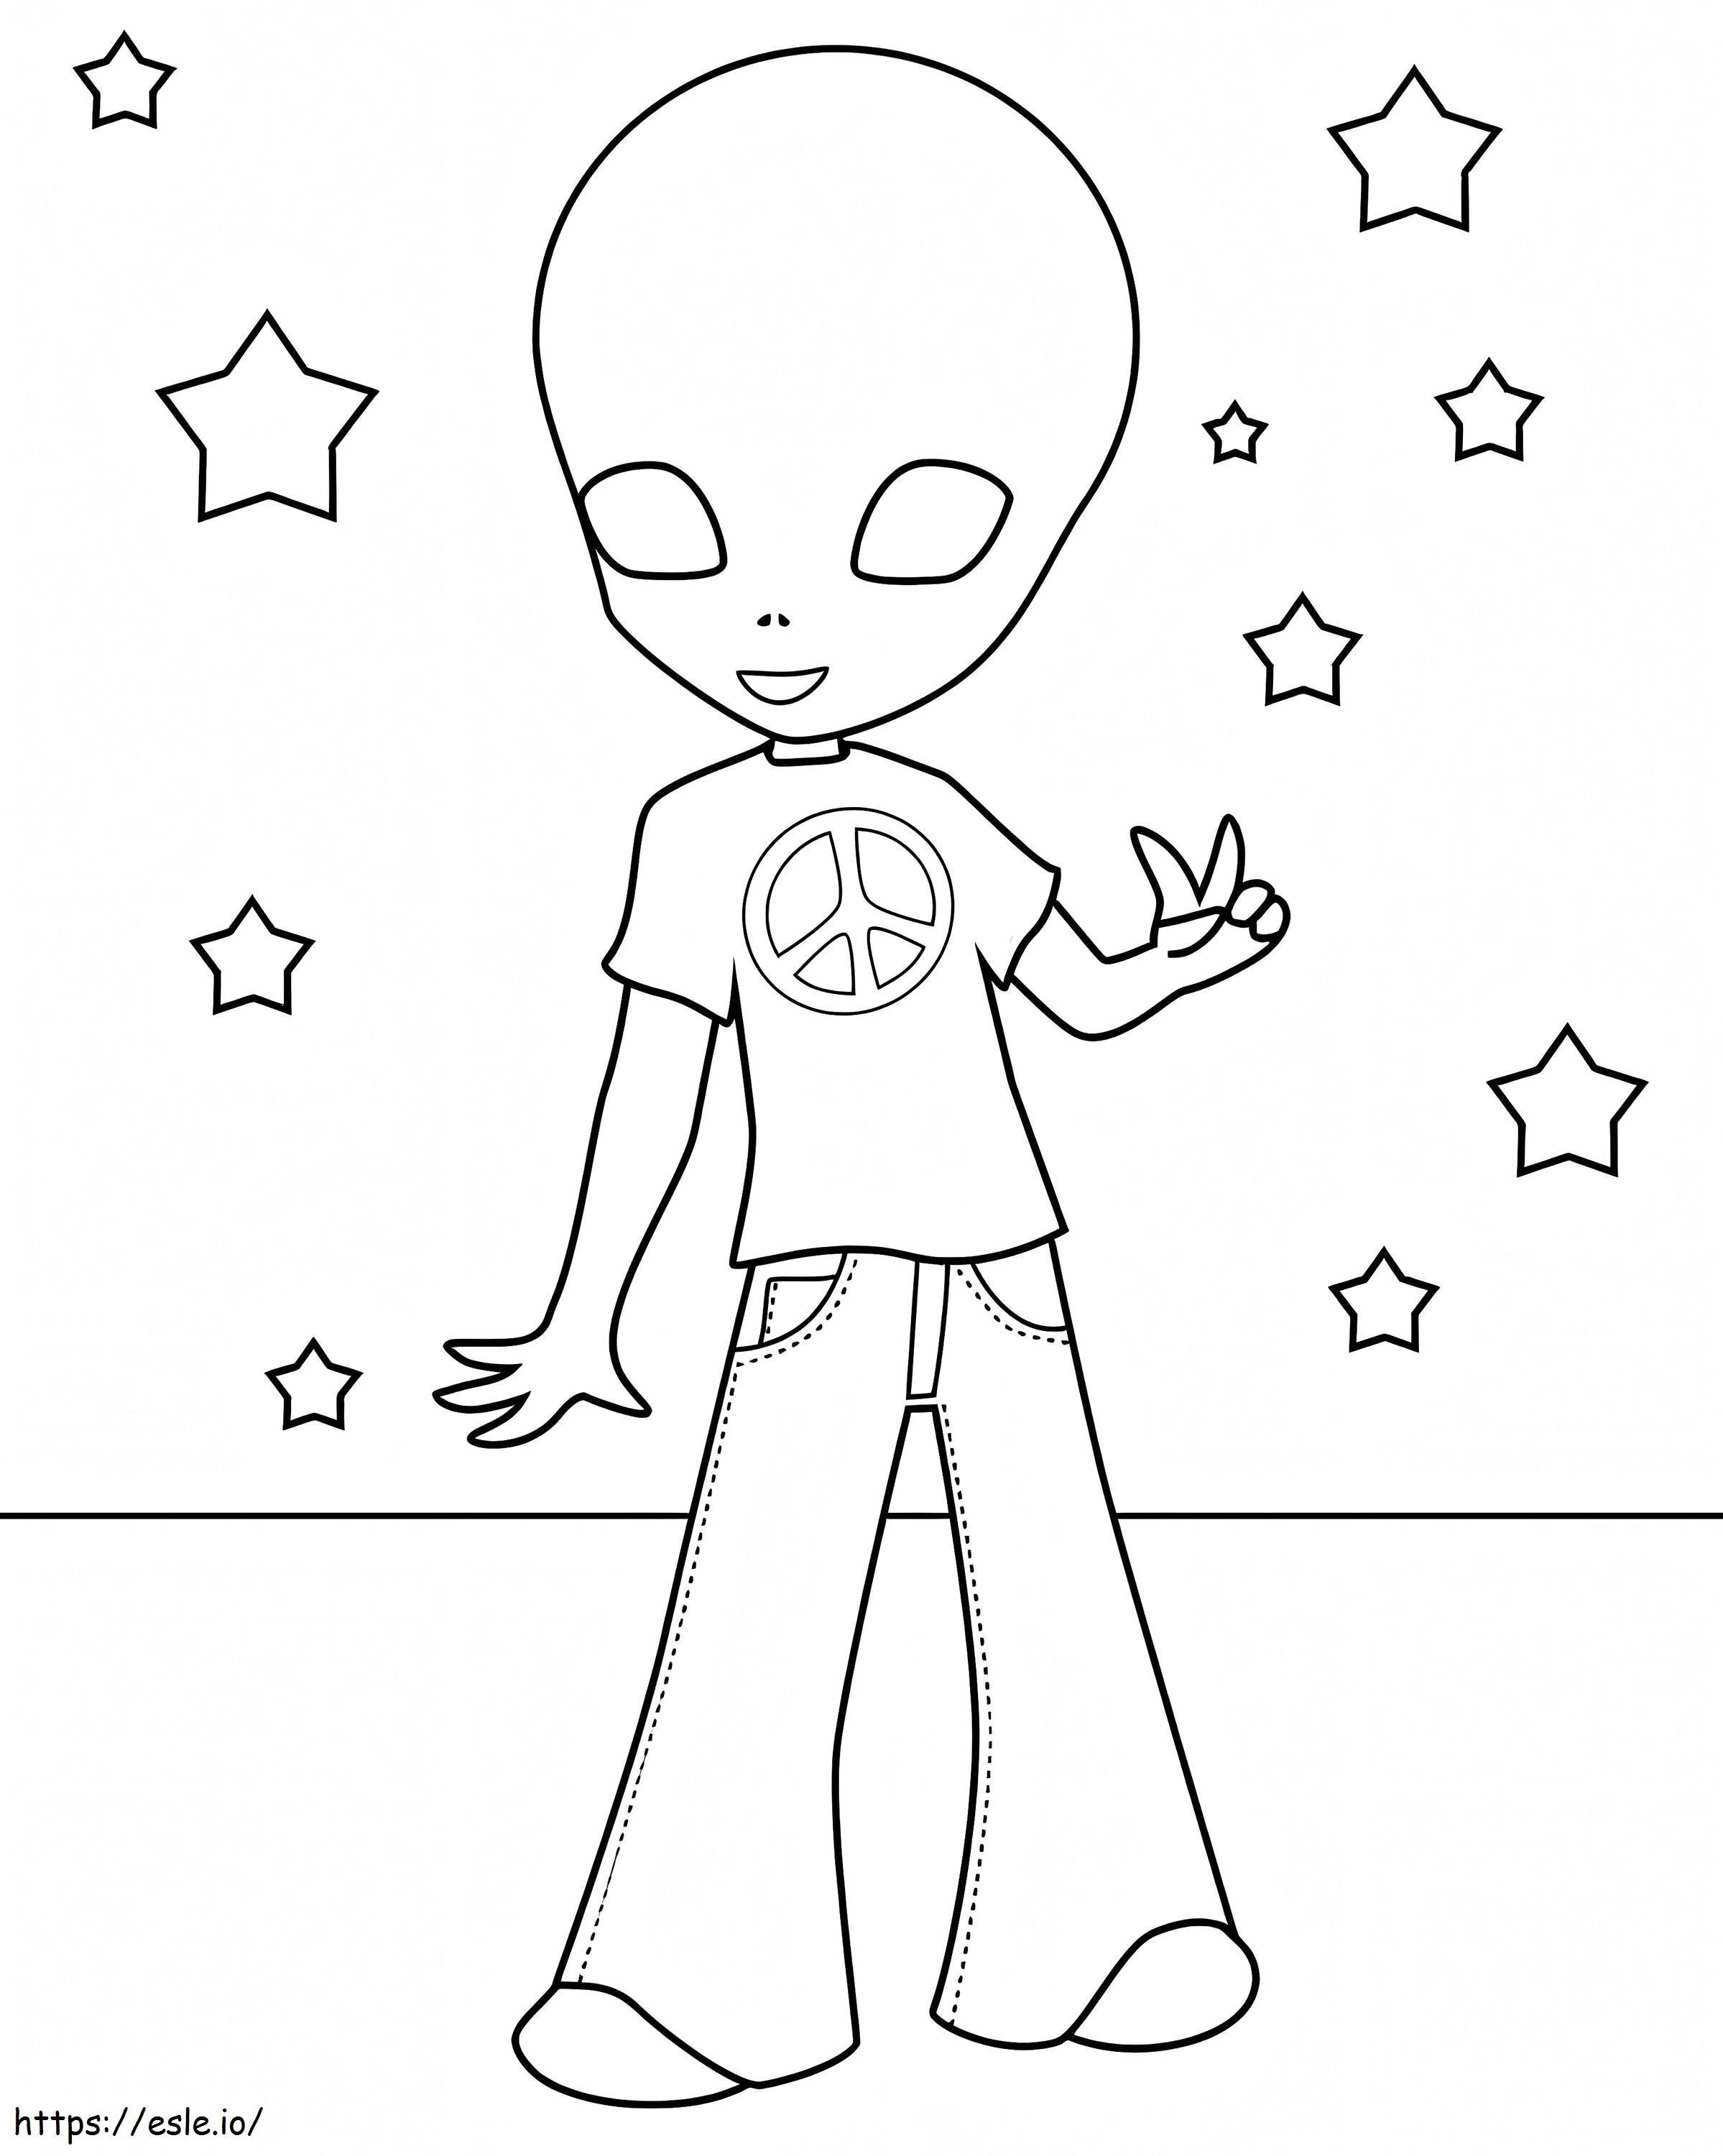 Alien Hippie coloring page